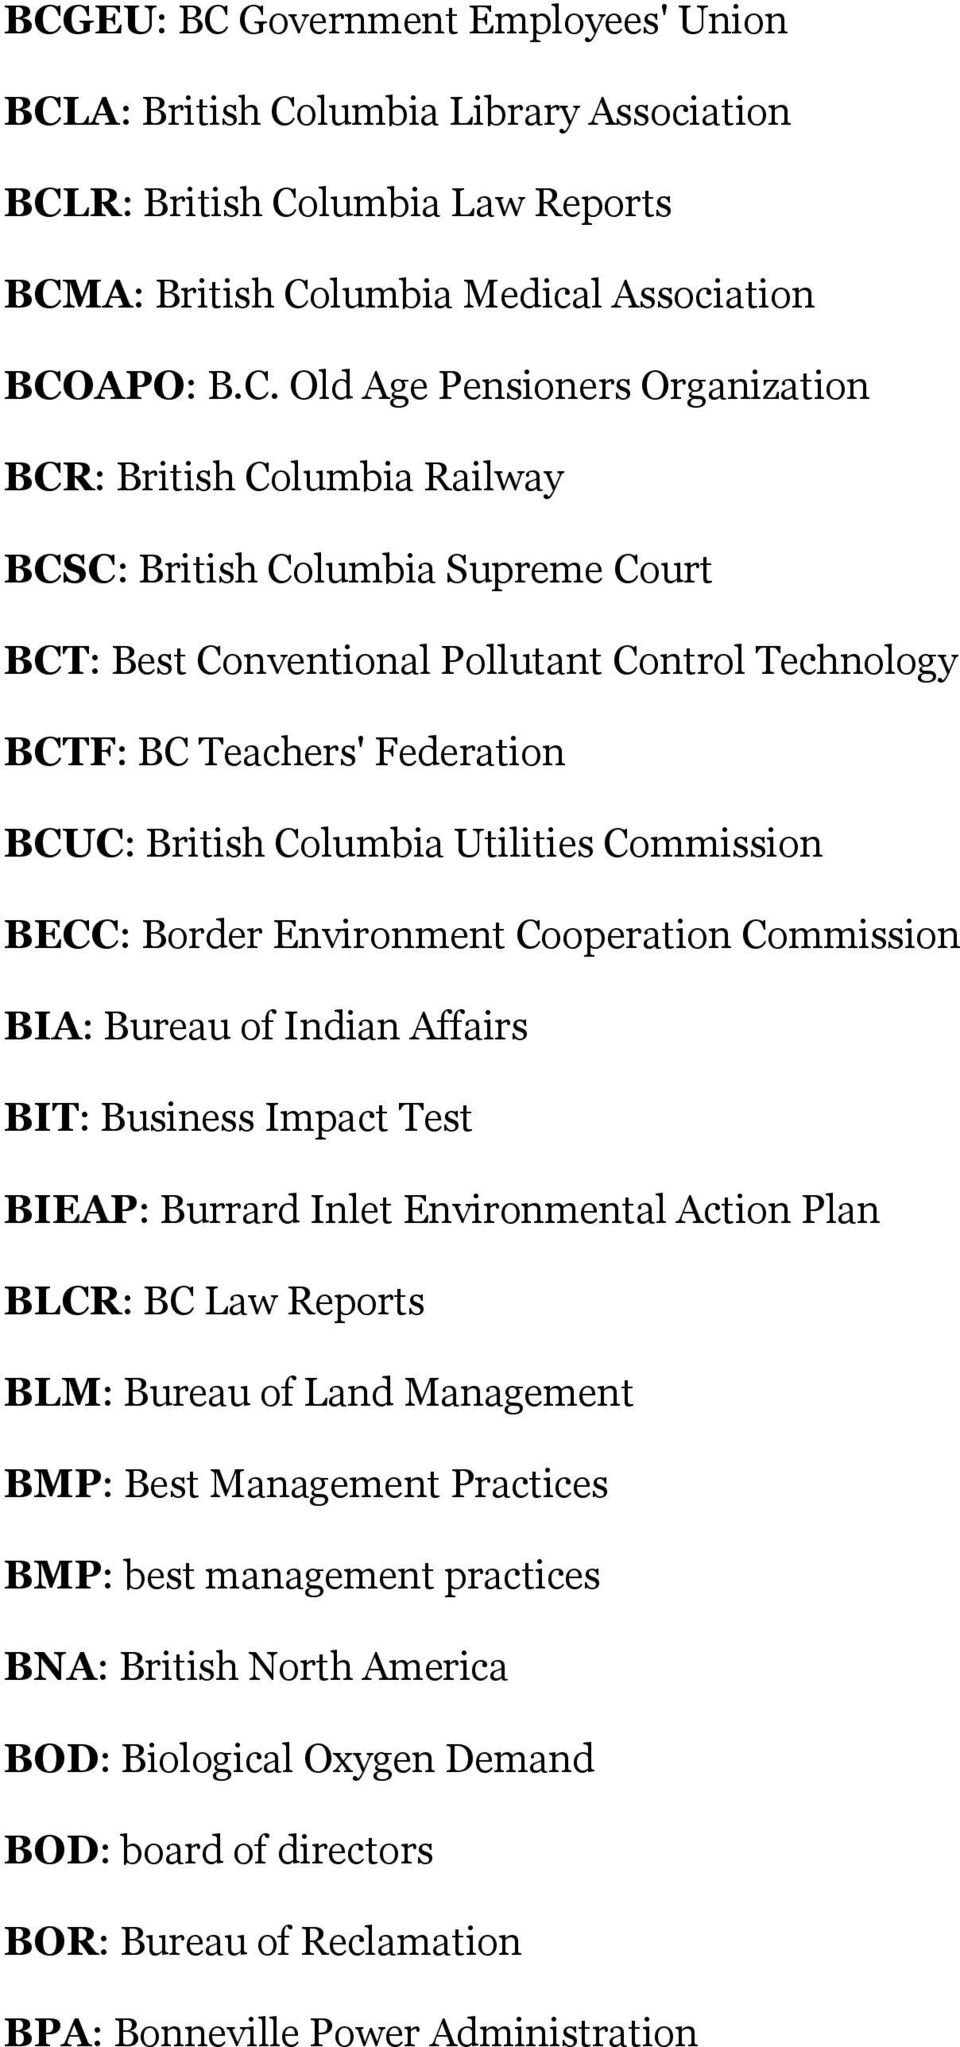 Commission BECC: Border Environment Cooperation Commission BIA: Bureau of Indian Affairs BIT: Business Impact Test BIEAP: Burrard Inlet Environmental Action Plan BLCR: BC Law Reports BLM: Bureau of